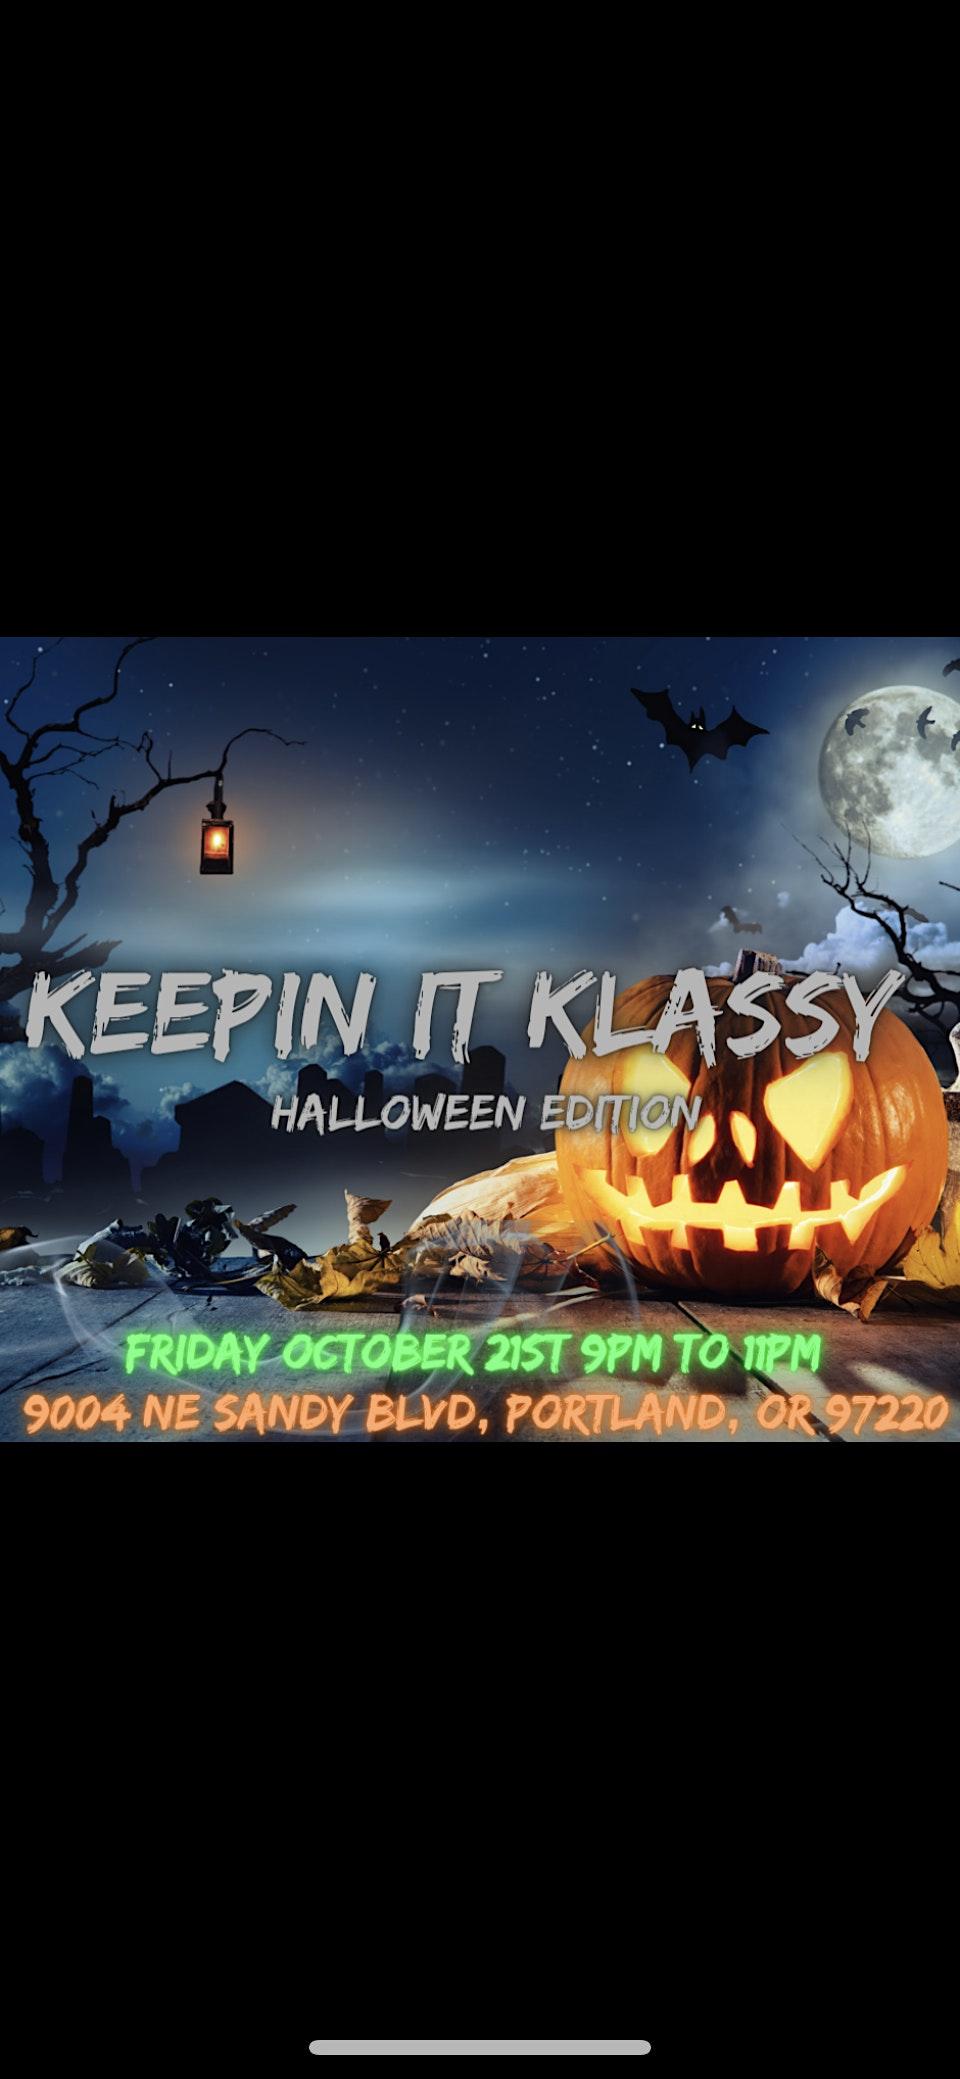 Keepin' it Klassy ; Halloween Drag and Comedy Show
Fri Oct 21, 9:00 PM - Fri Oct 21, 11:30 PM